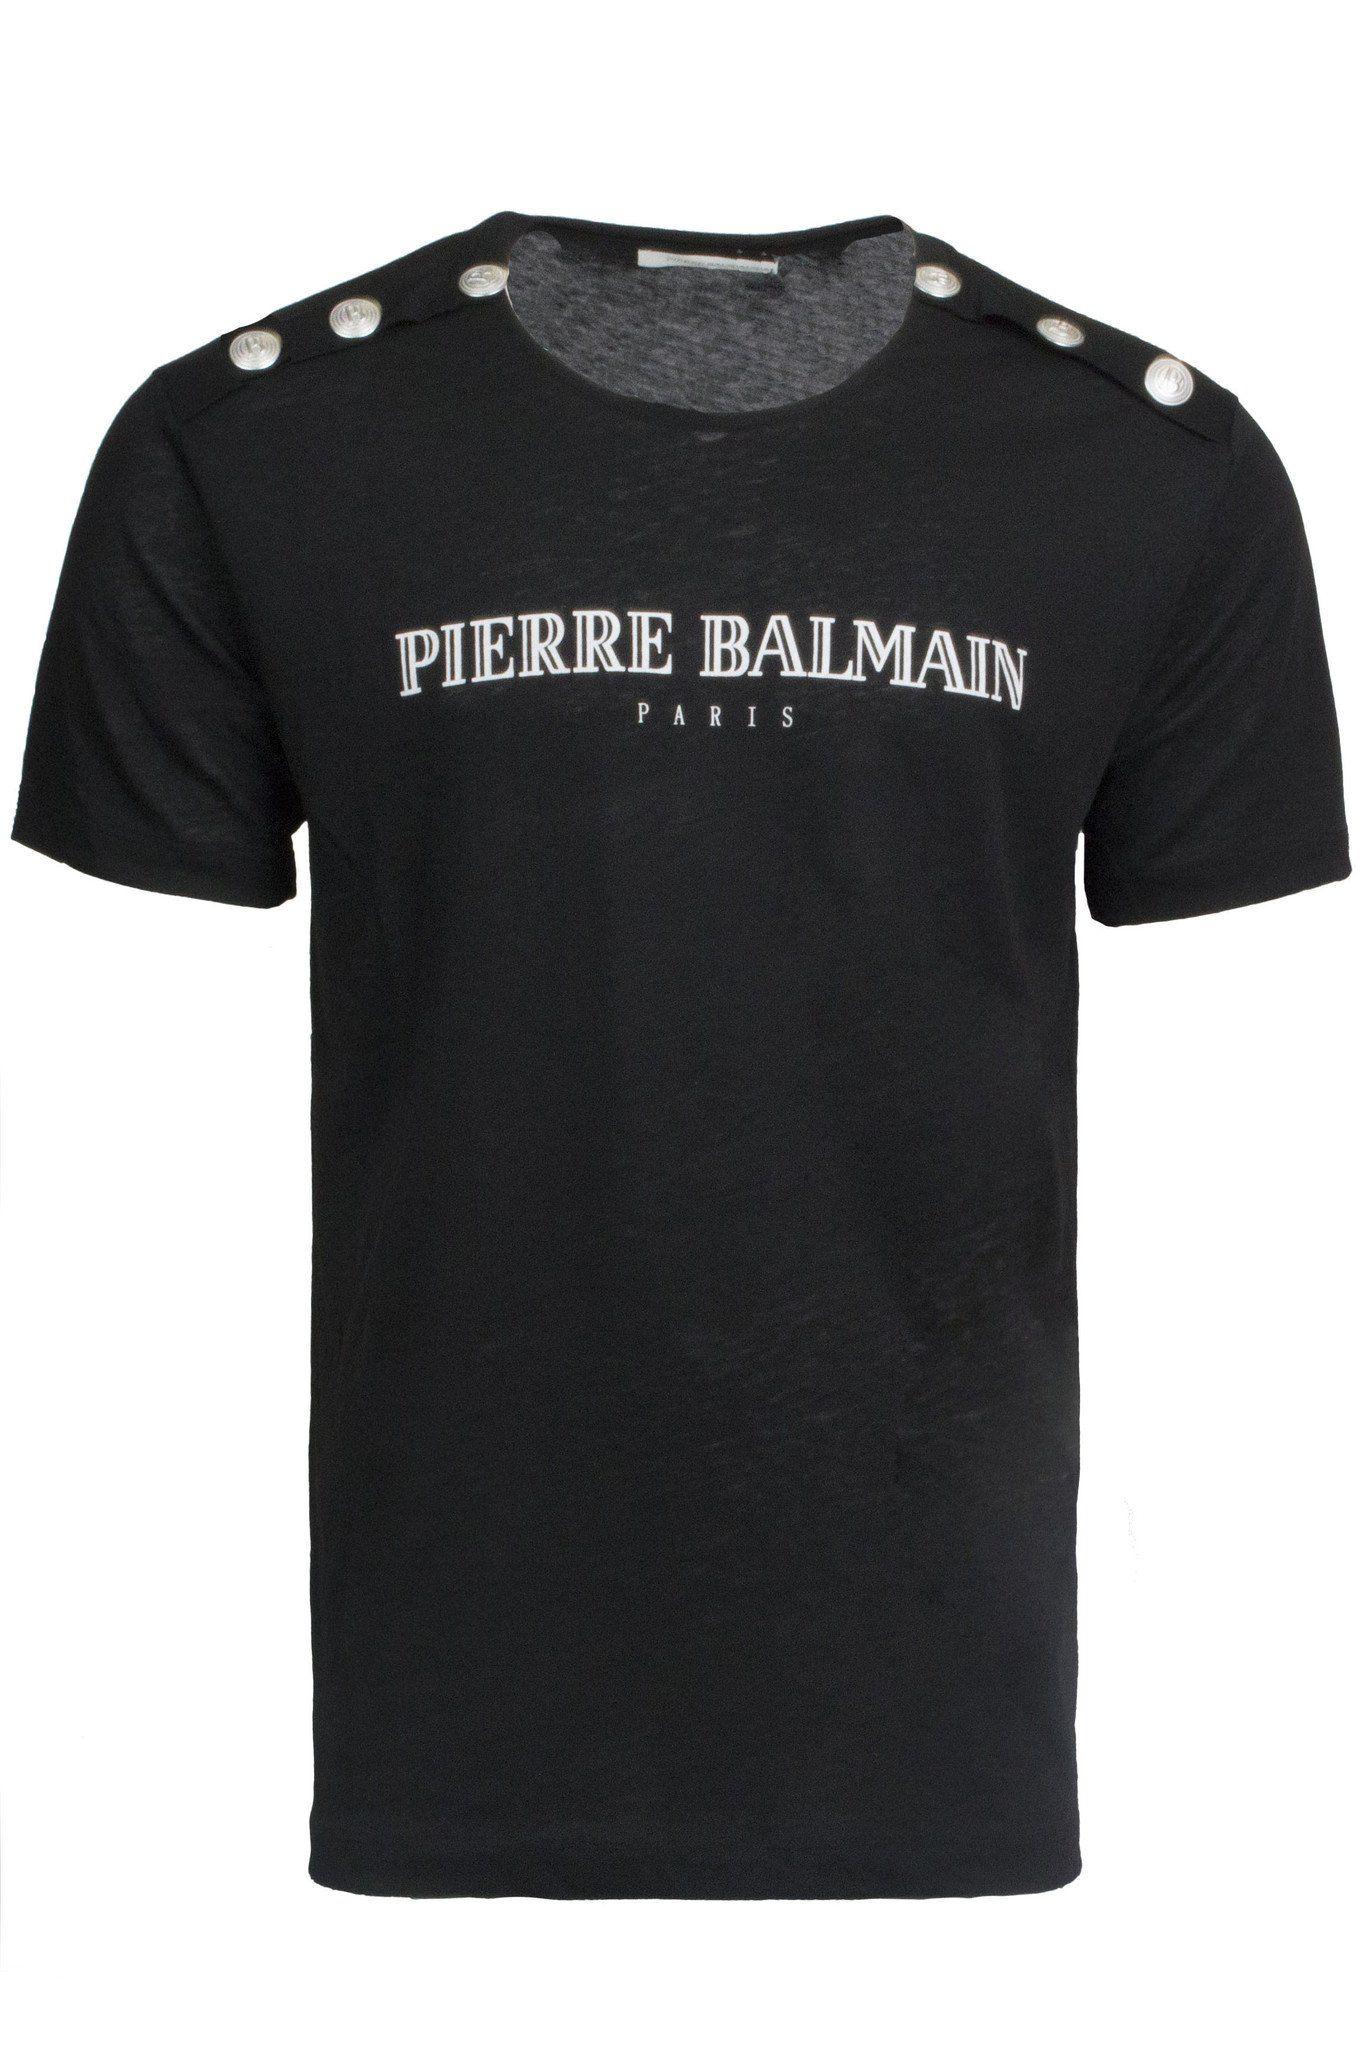 Pierre Balmain Logo - Pierre Balmain Logo Button Black Tee | Pure Atlanta – PureAtlanta.com